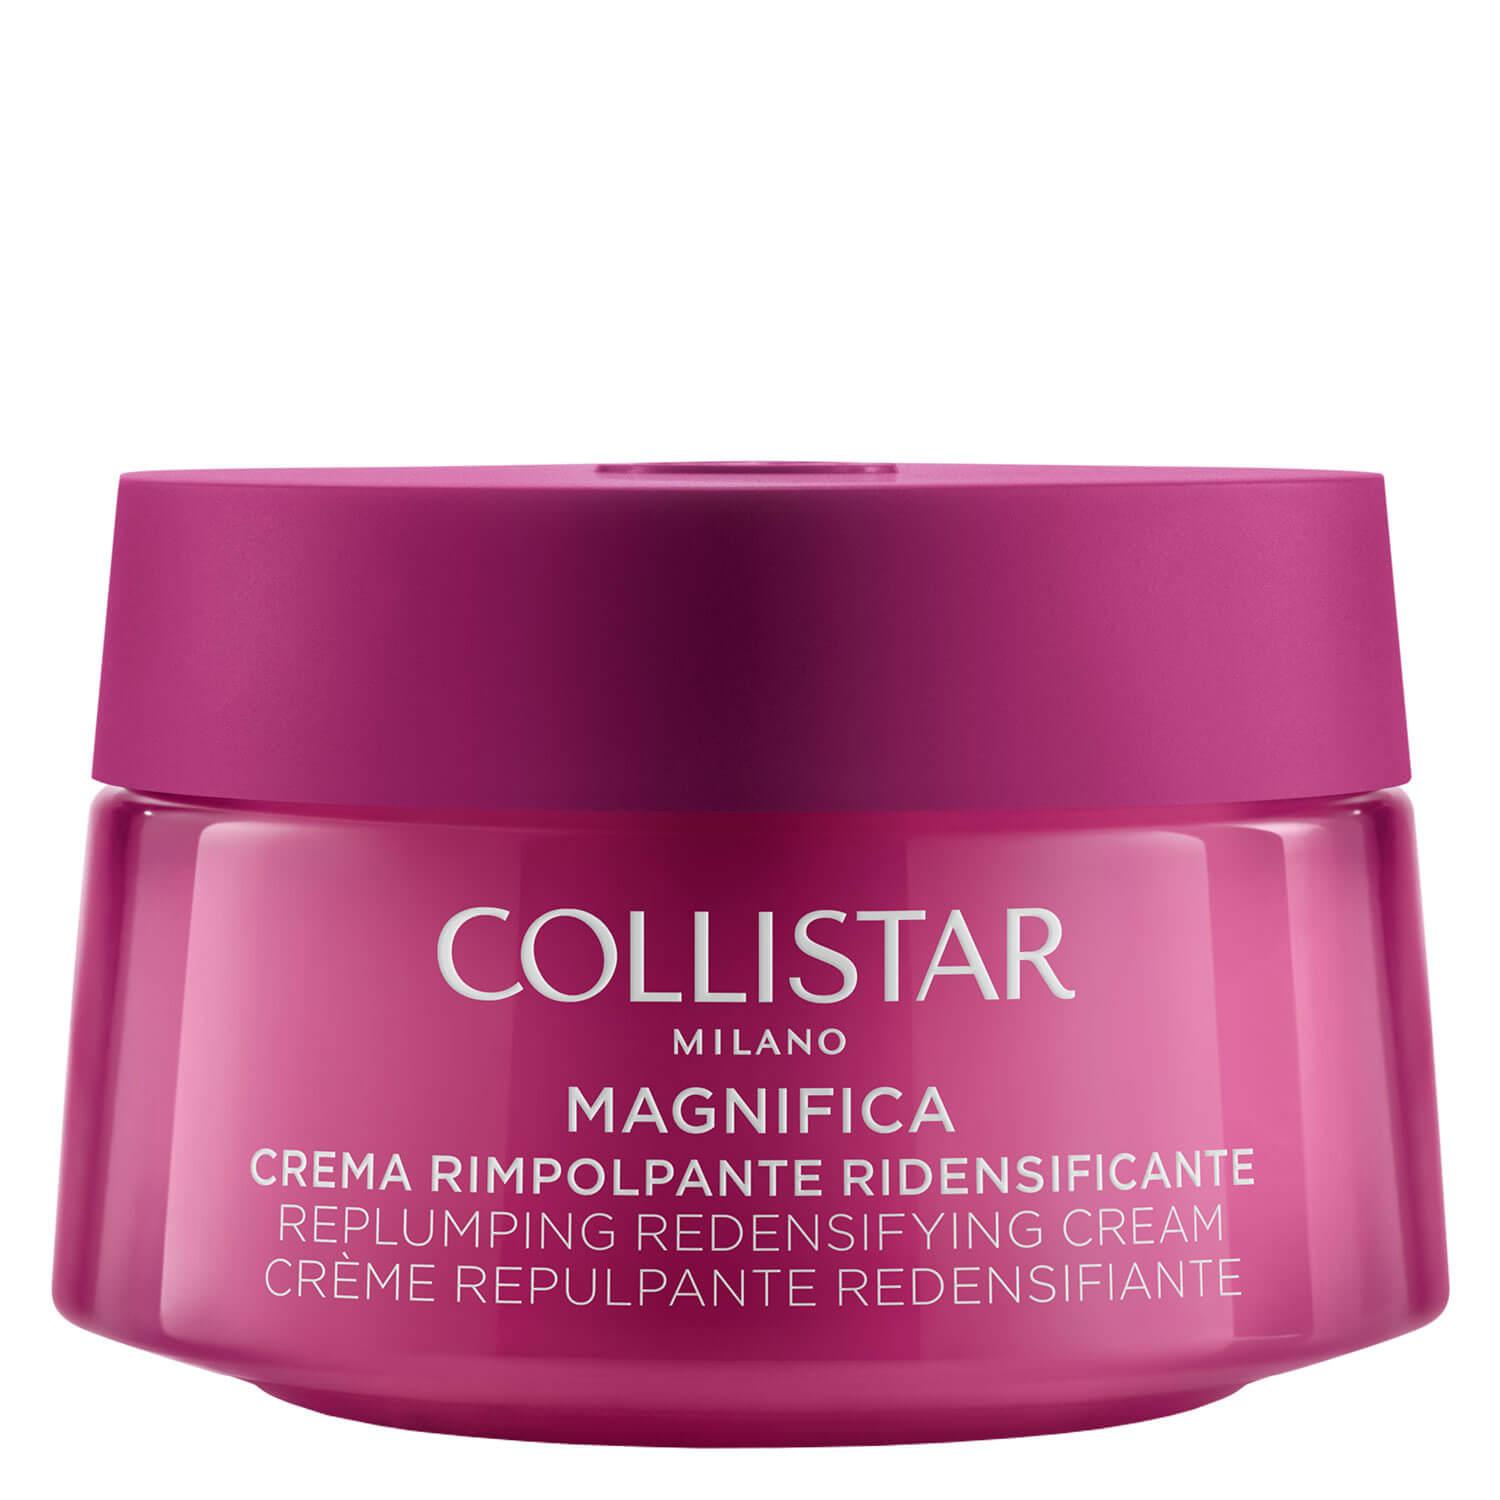 CS Magnifica - Replumping Redensifying Cream